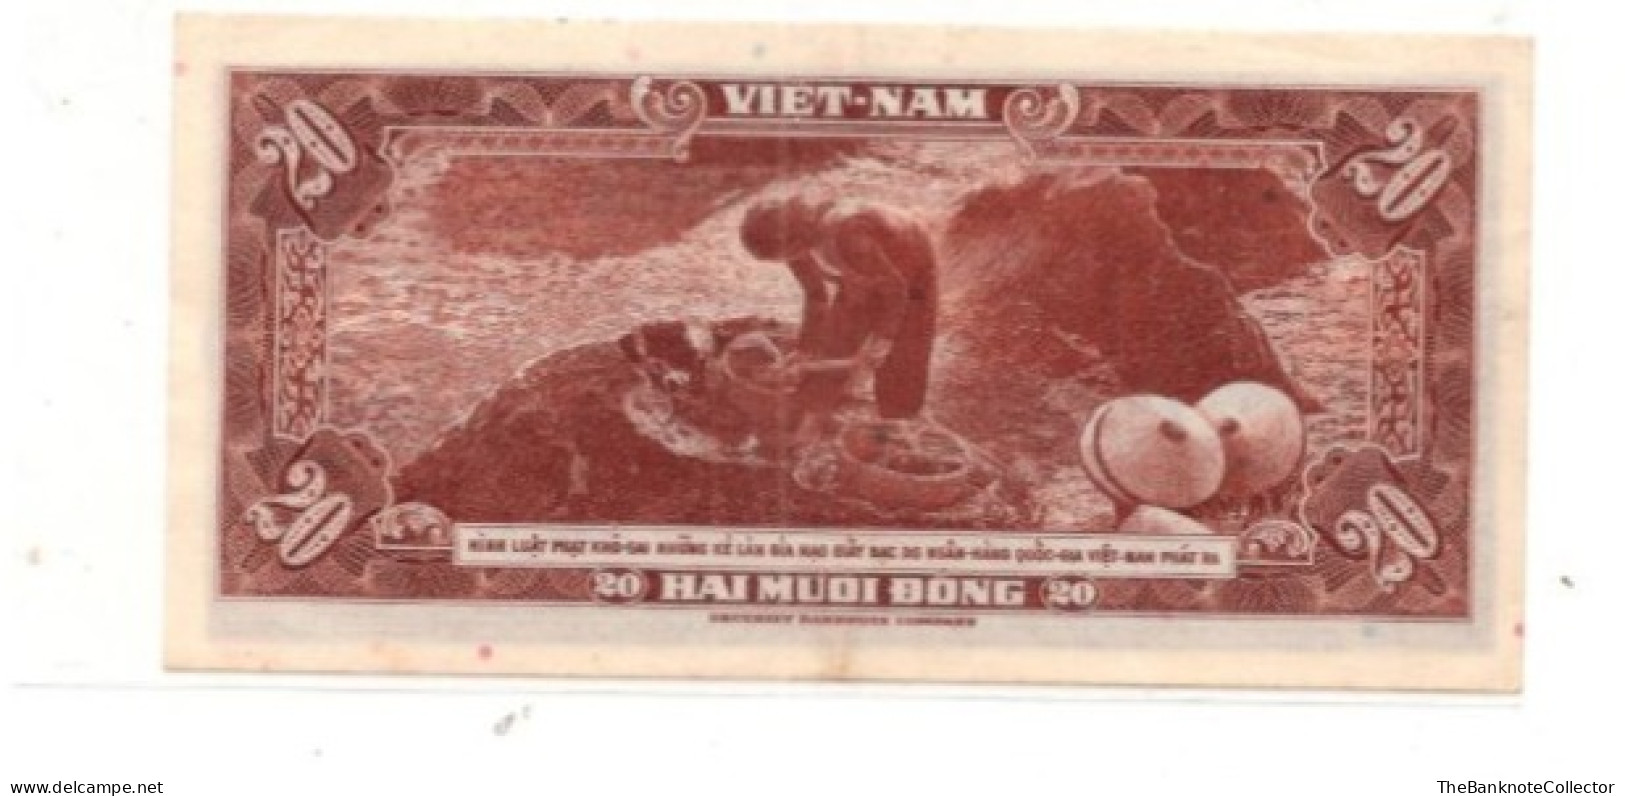 South Vietnam 20 Dong ND 1966 P-6  AUNC - Viêt-Nam